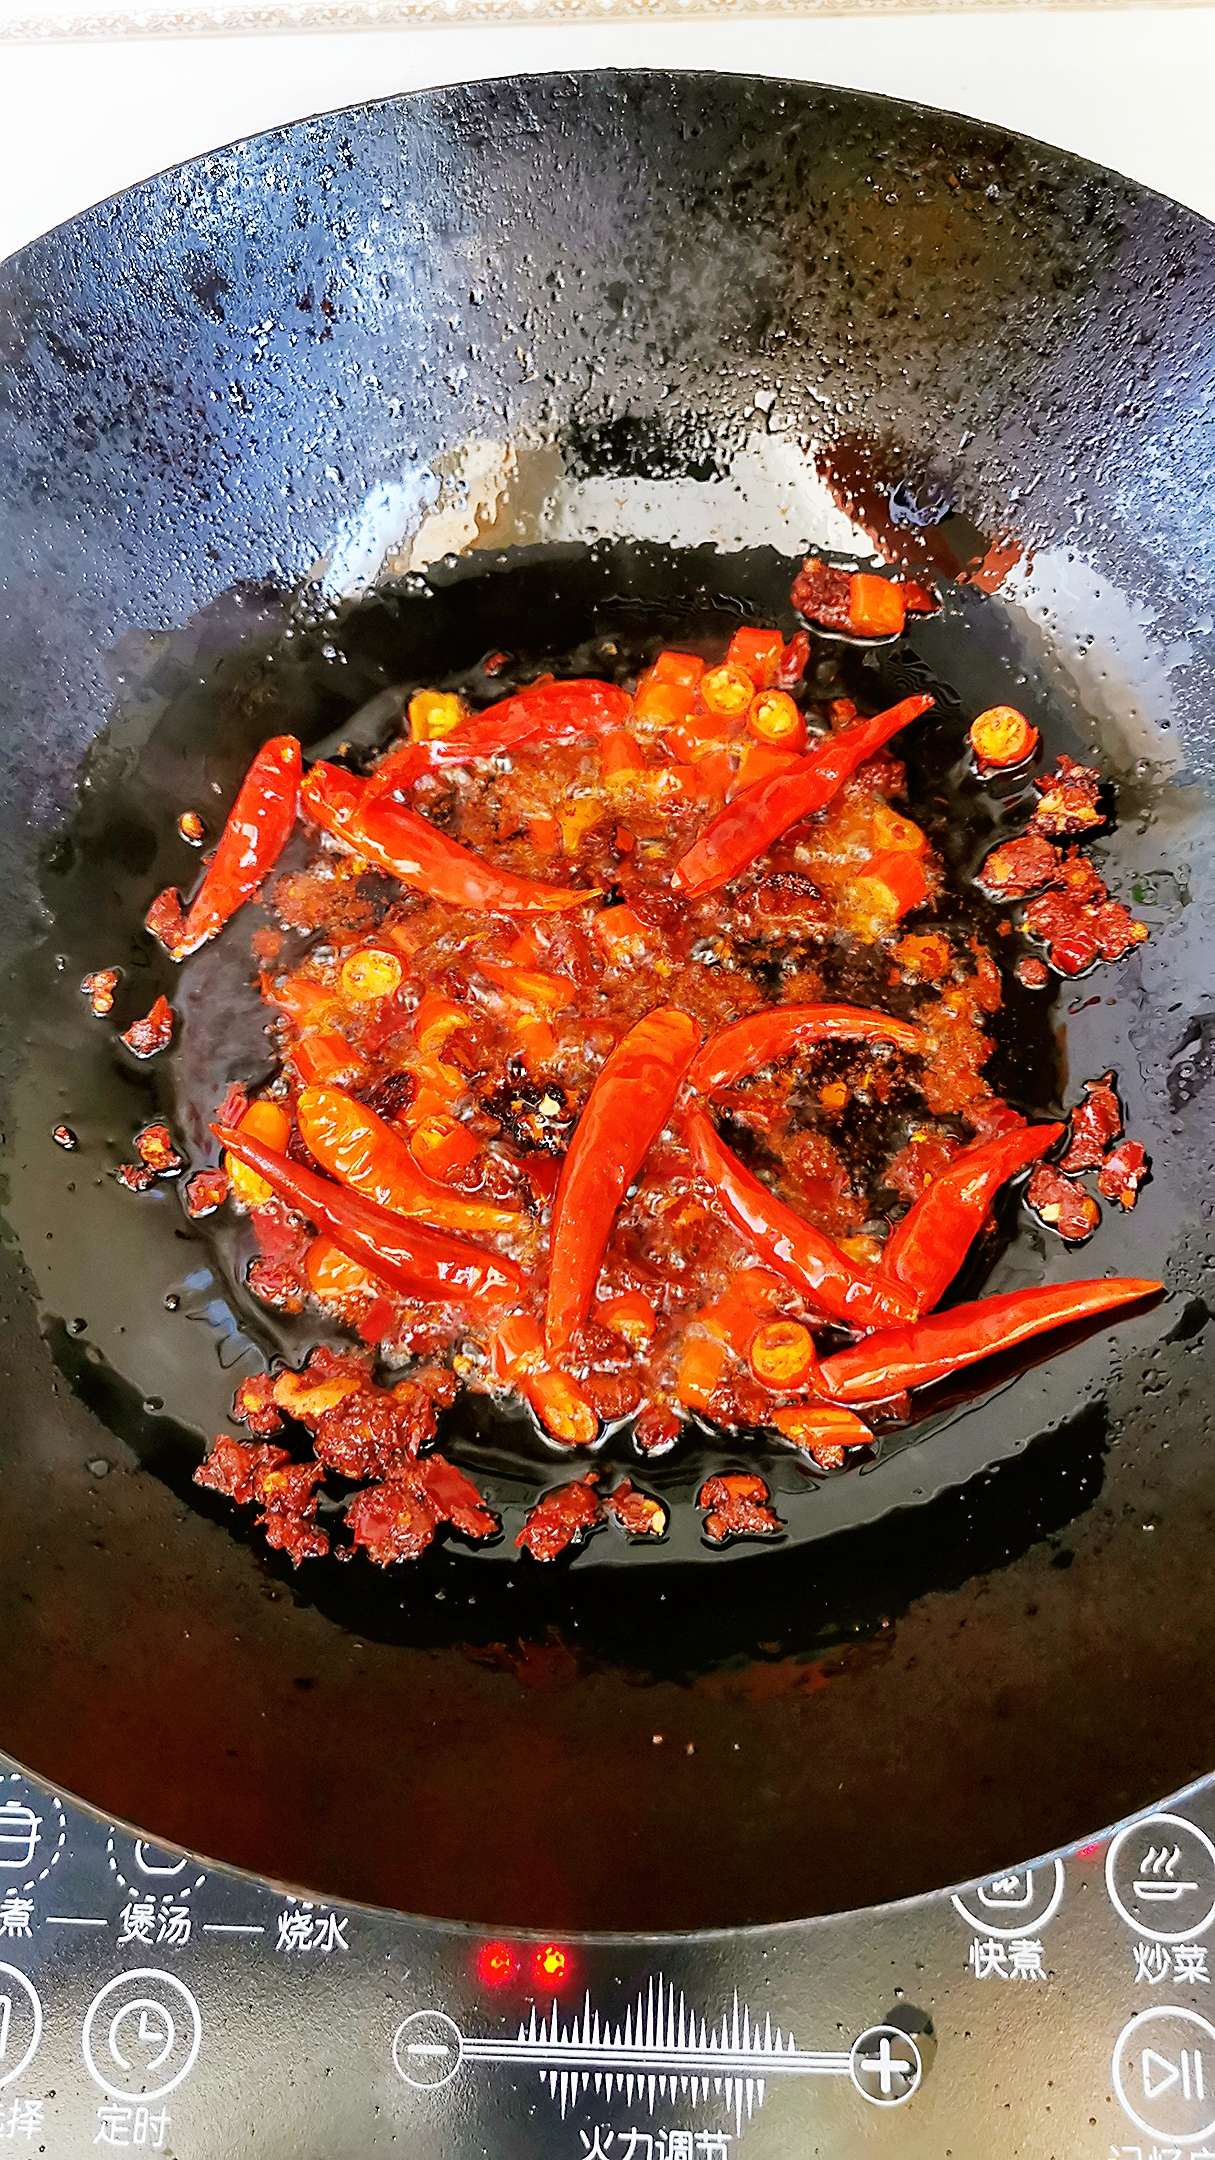 Spicy Stir-fried Lamb recipe